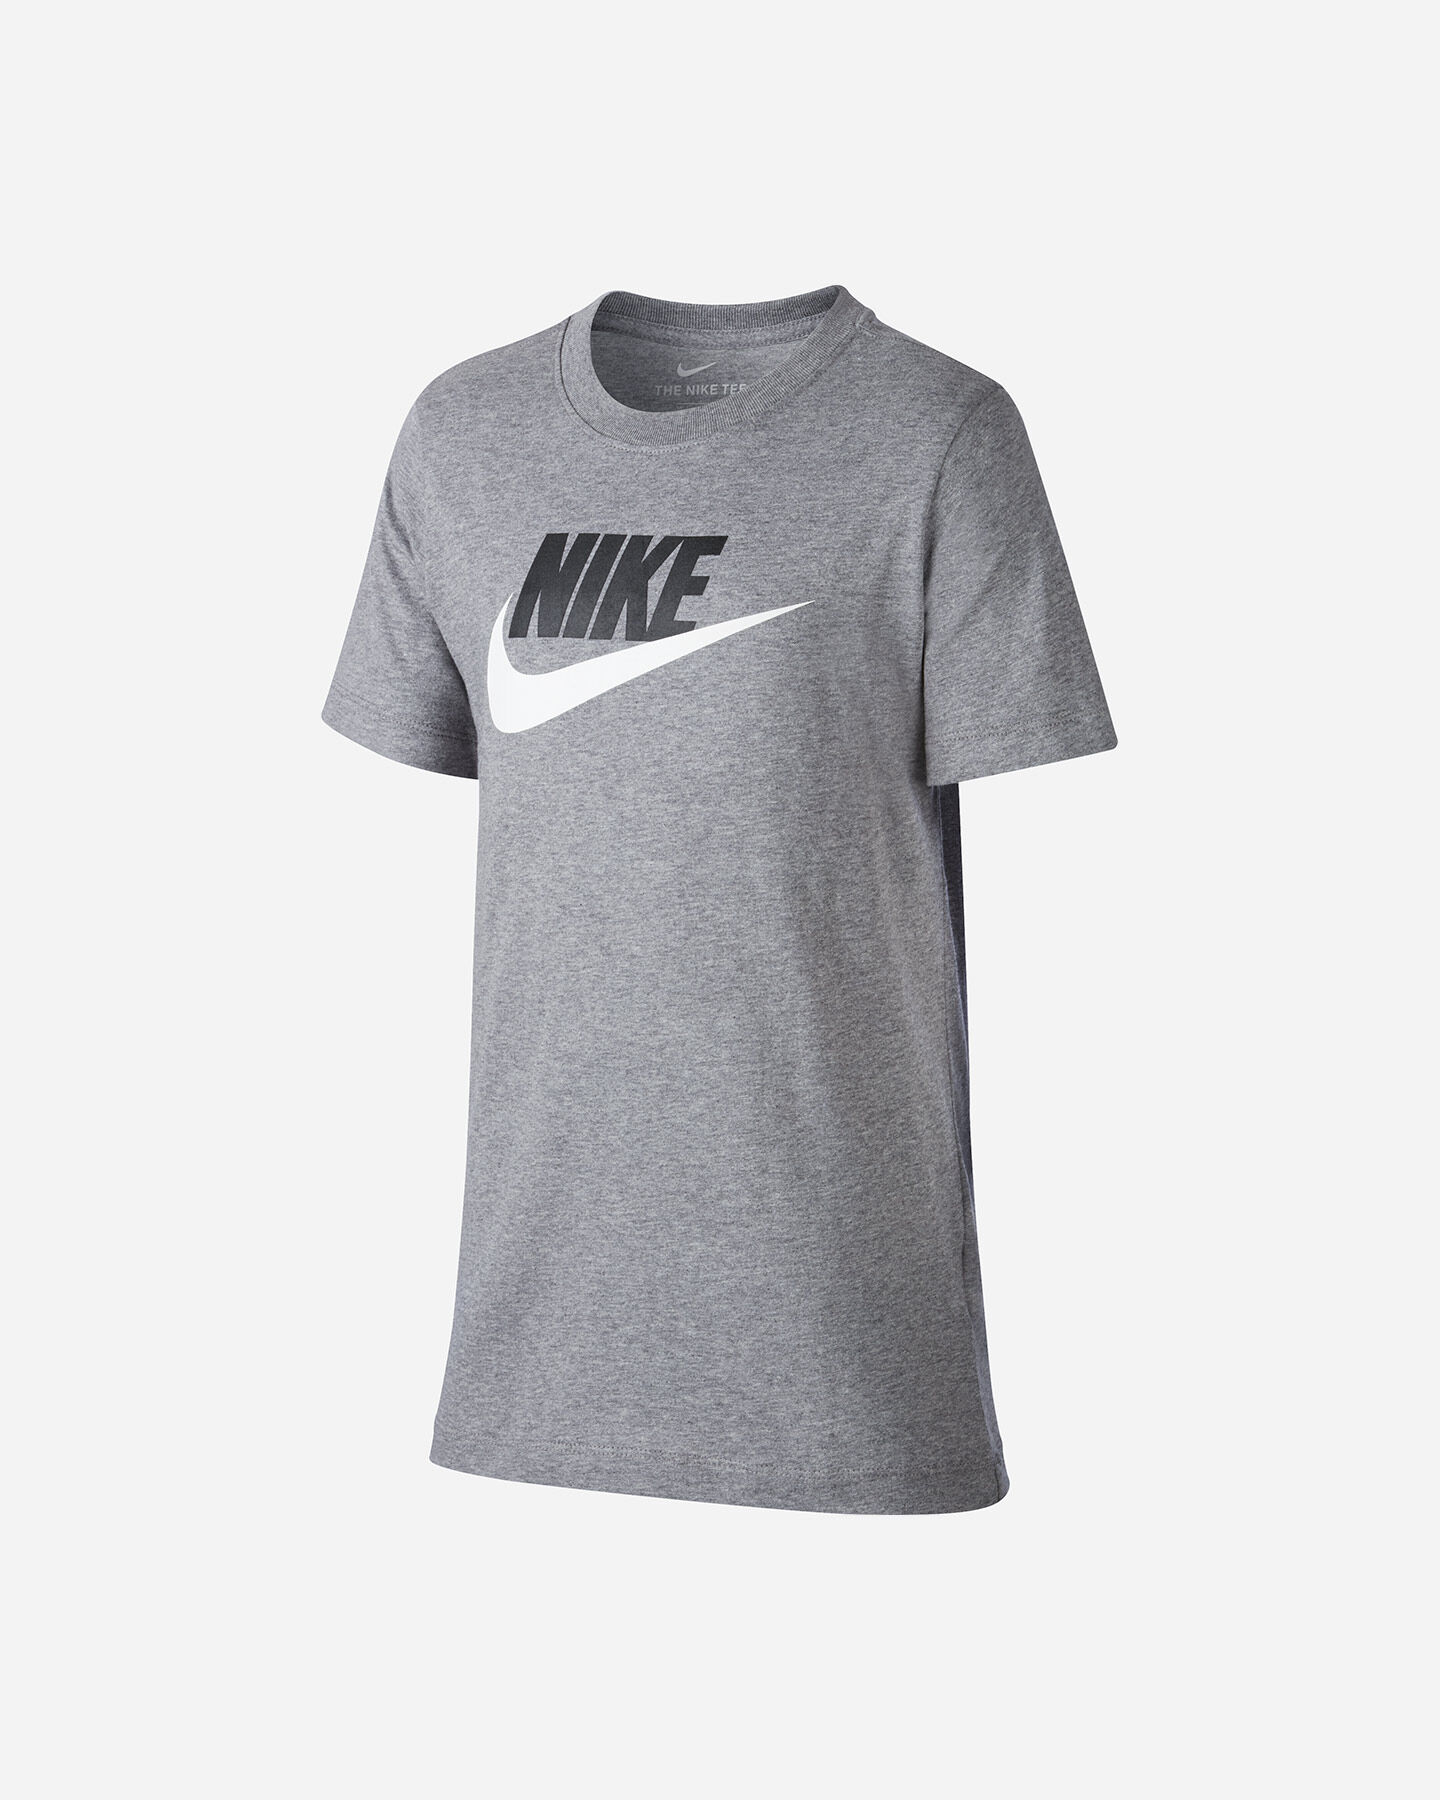  T-Shirt NIKE LOGO JR S5162701|091|S scatto 0